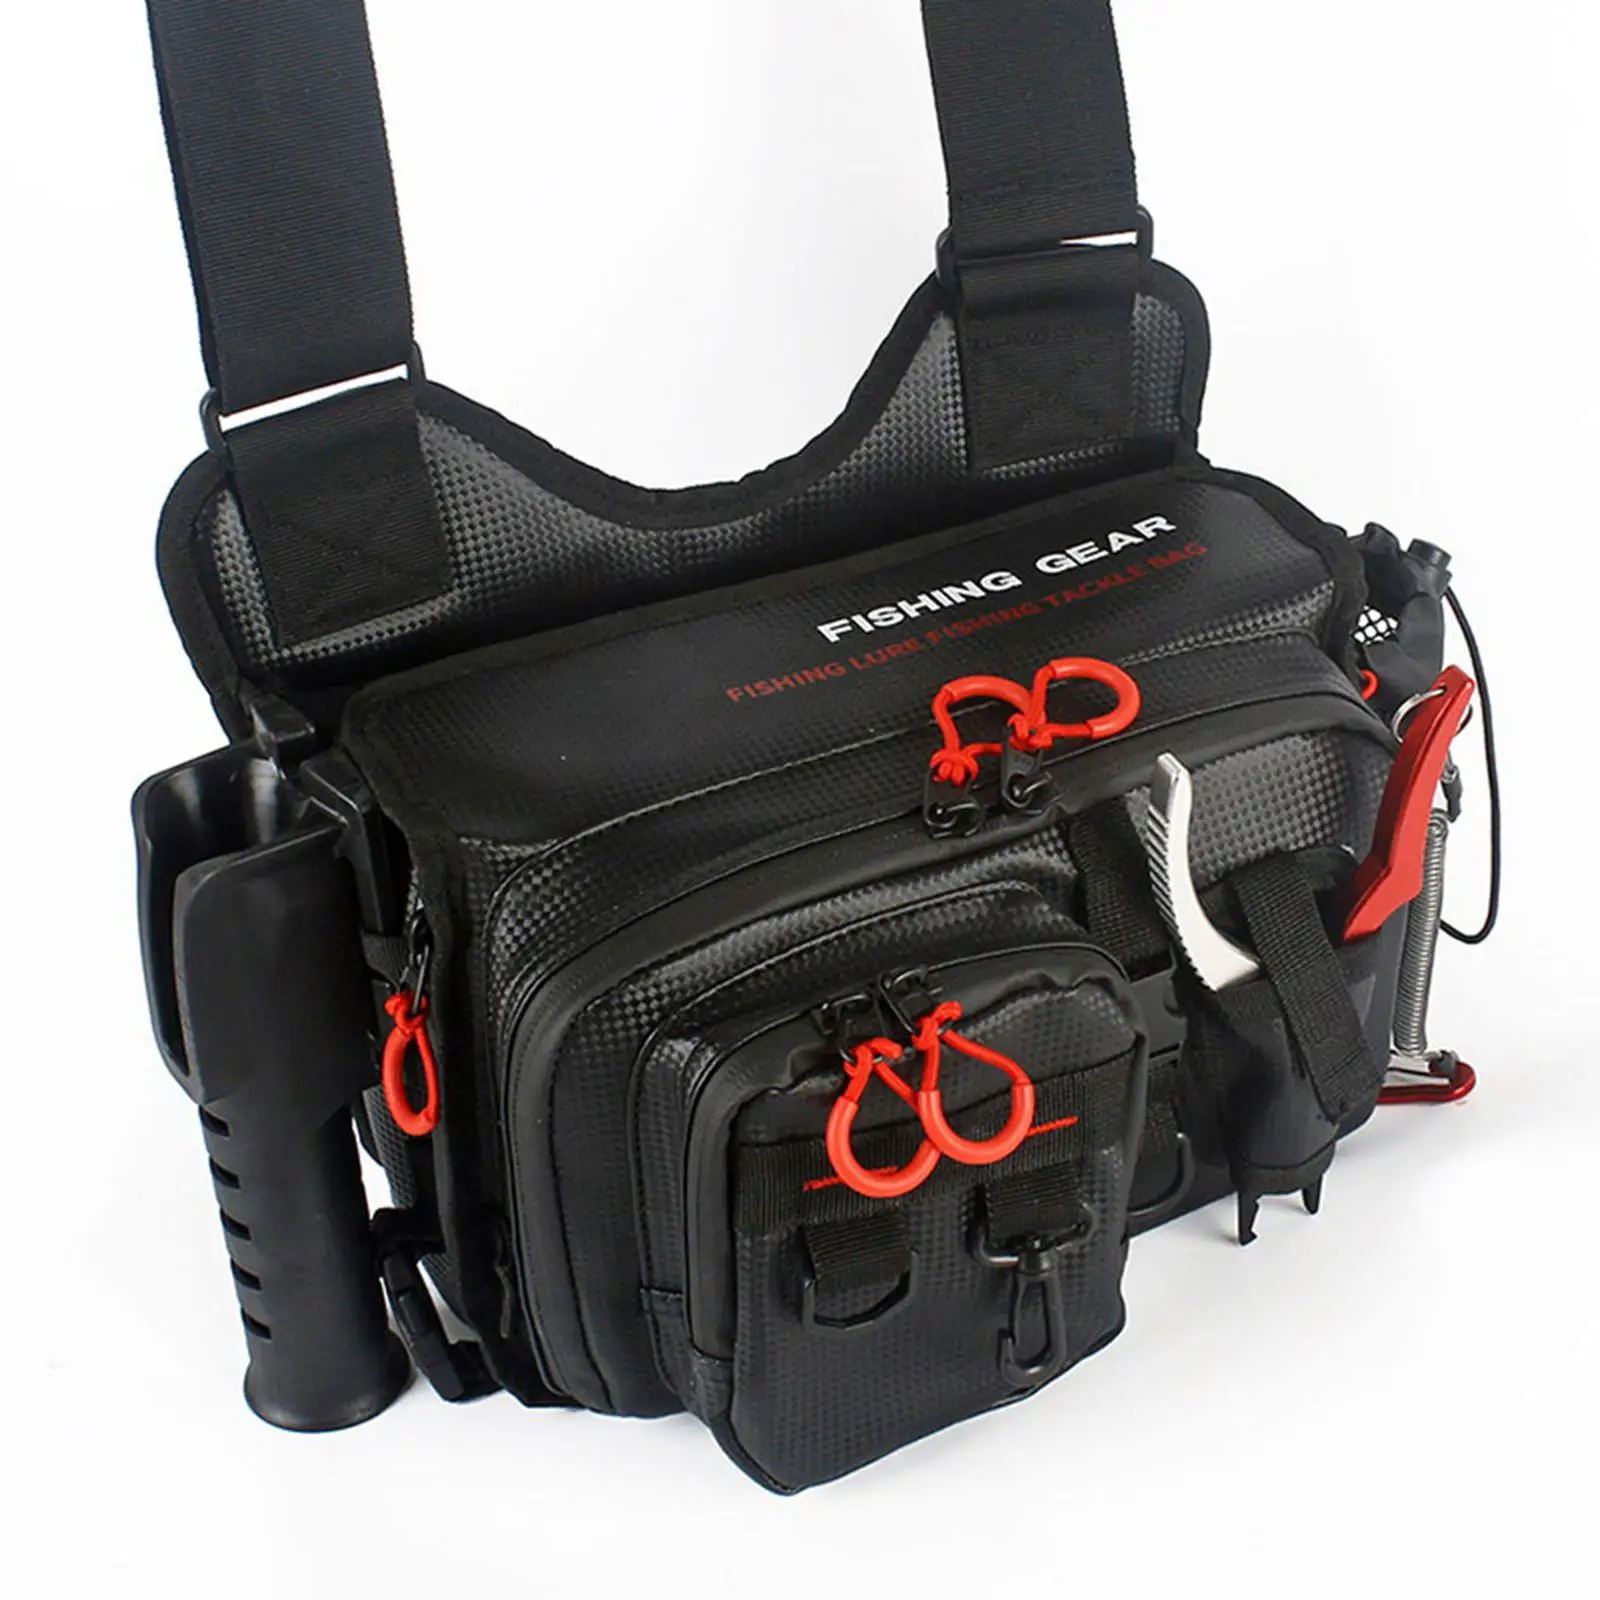 Lure Bag Shoulder Bag Handbag Fishing Tackle Bag for Outdoor Hiking Camping